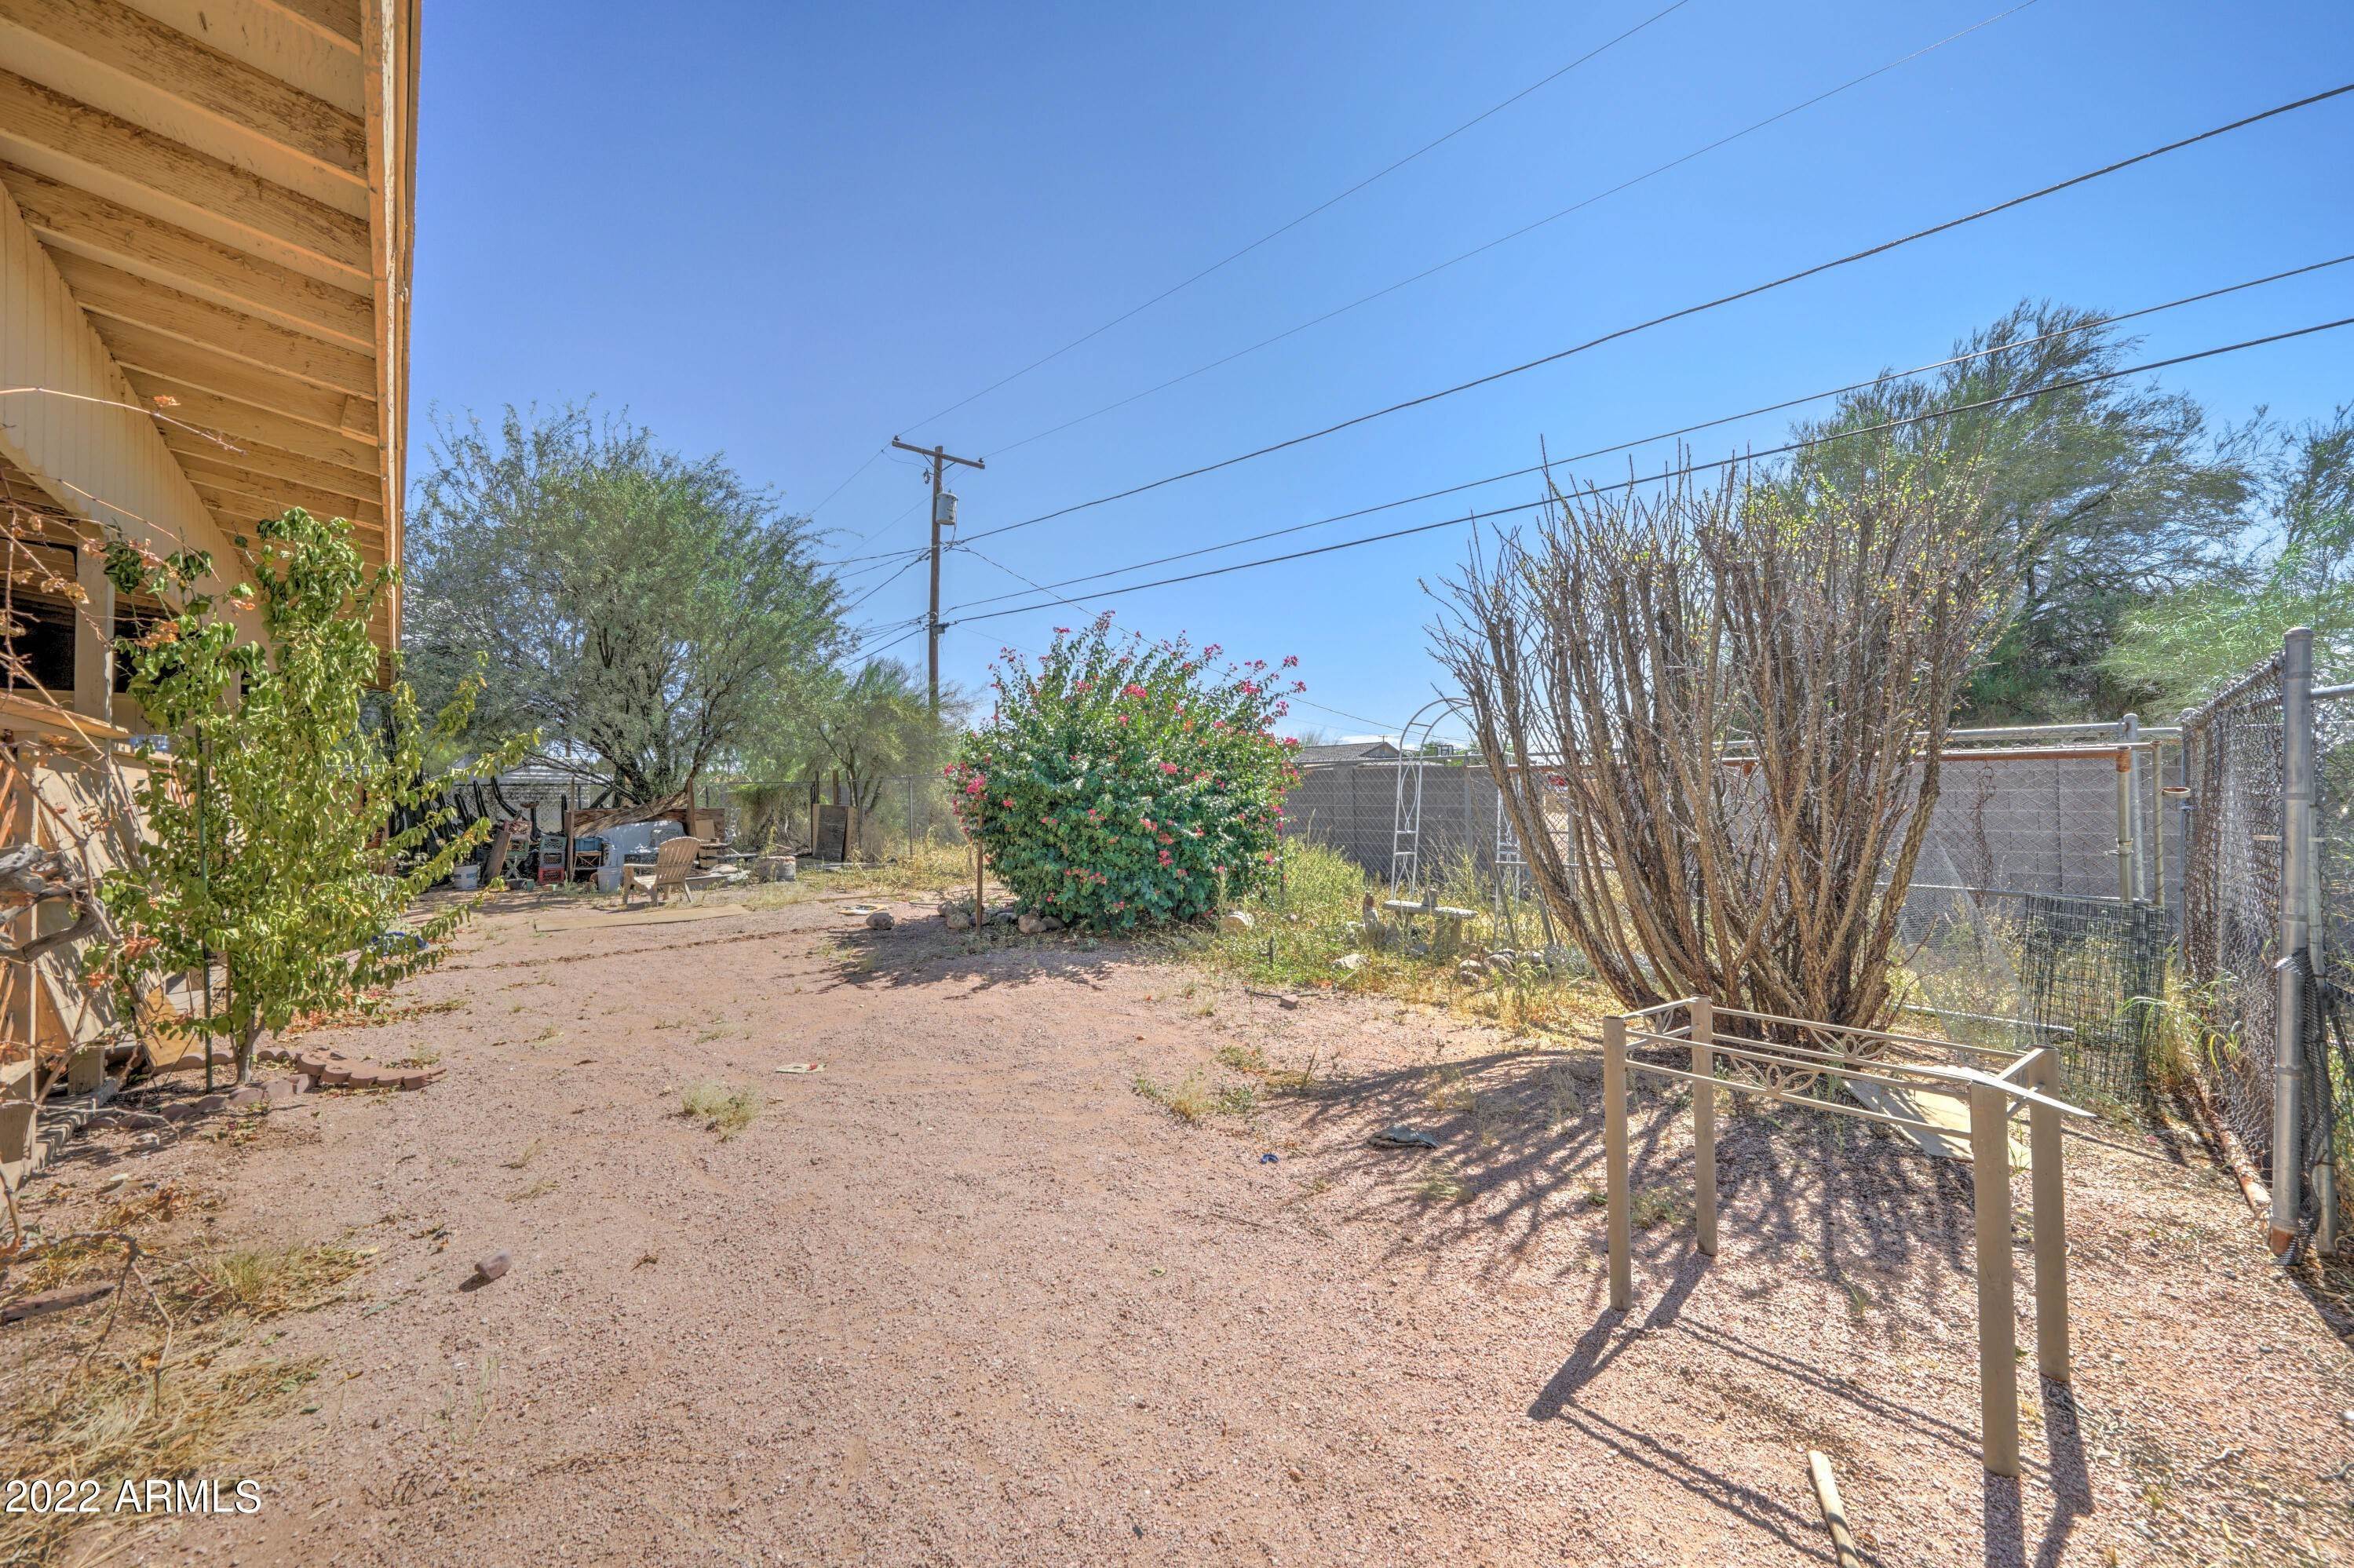 19. Mobile Home for Sale at Mesa, AZ 85208